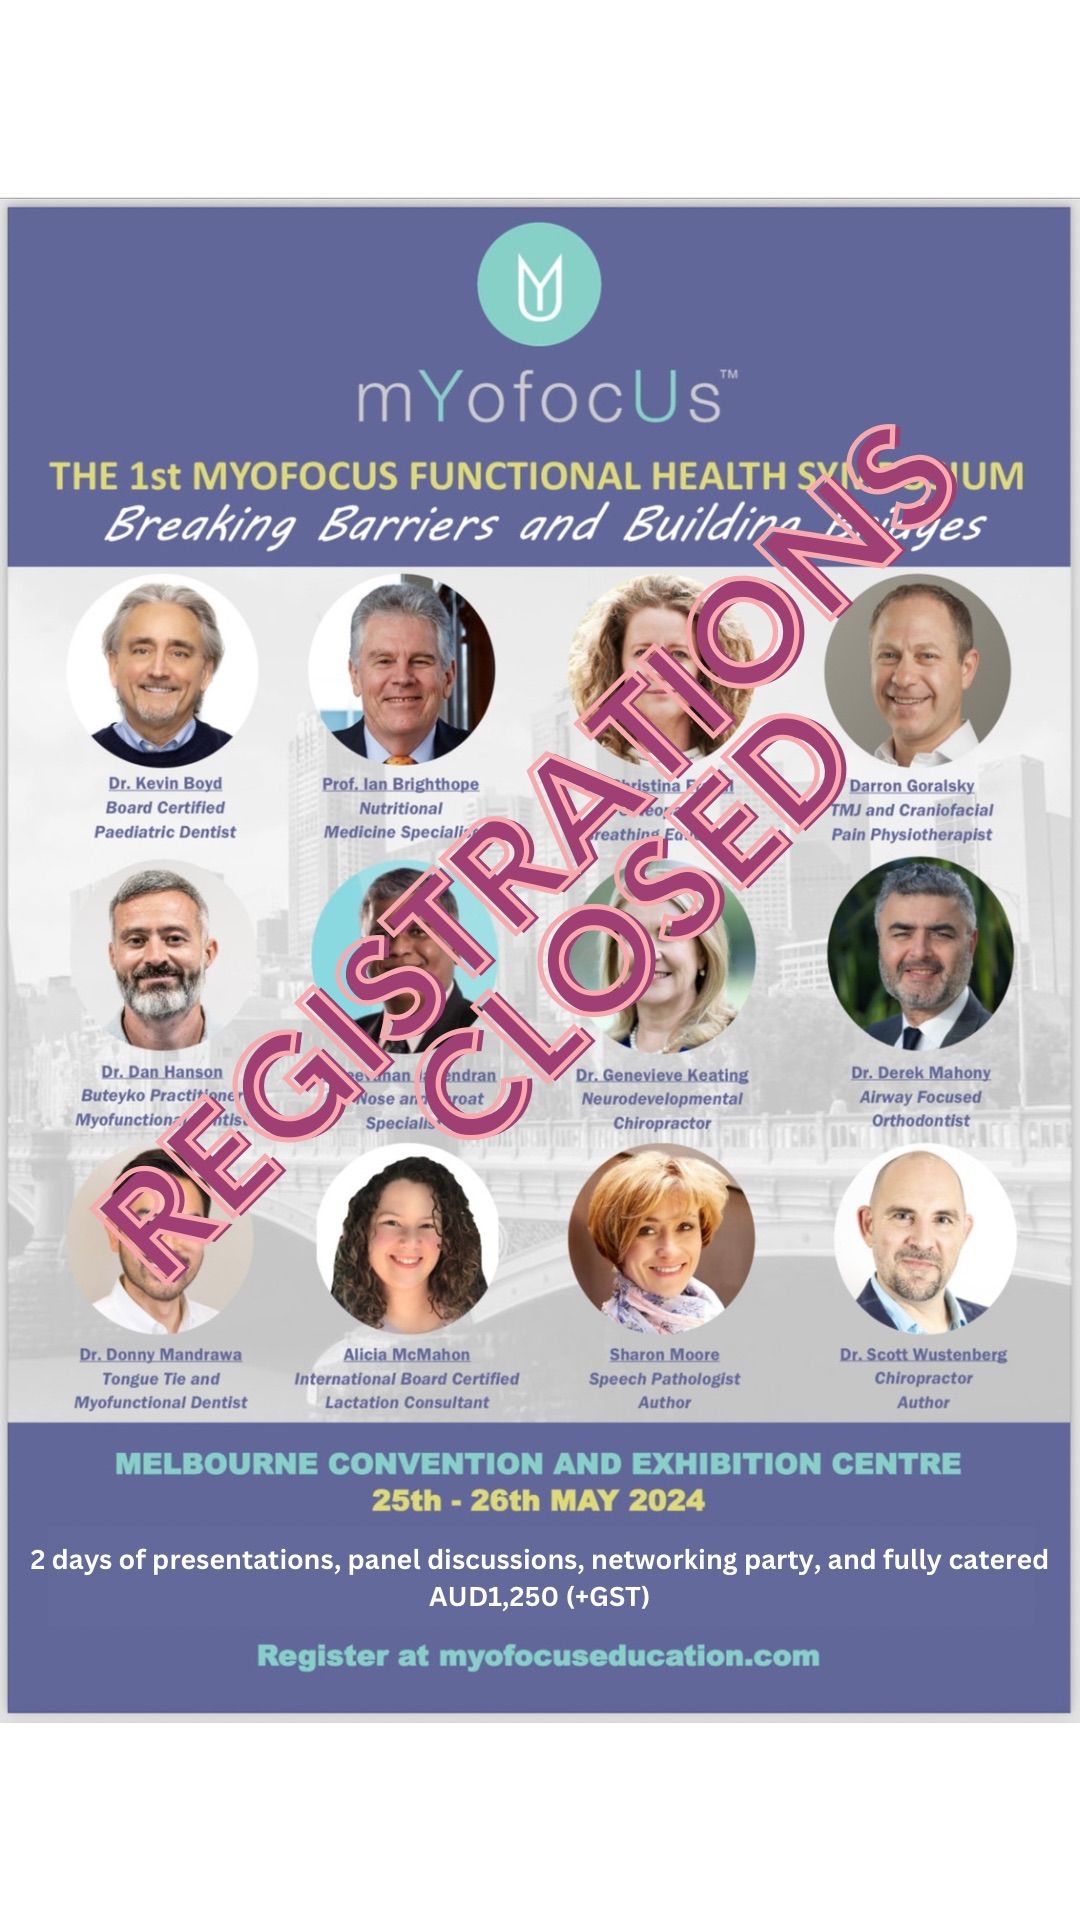 The Myofocus Functional Health Symposium 